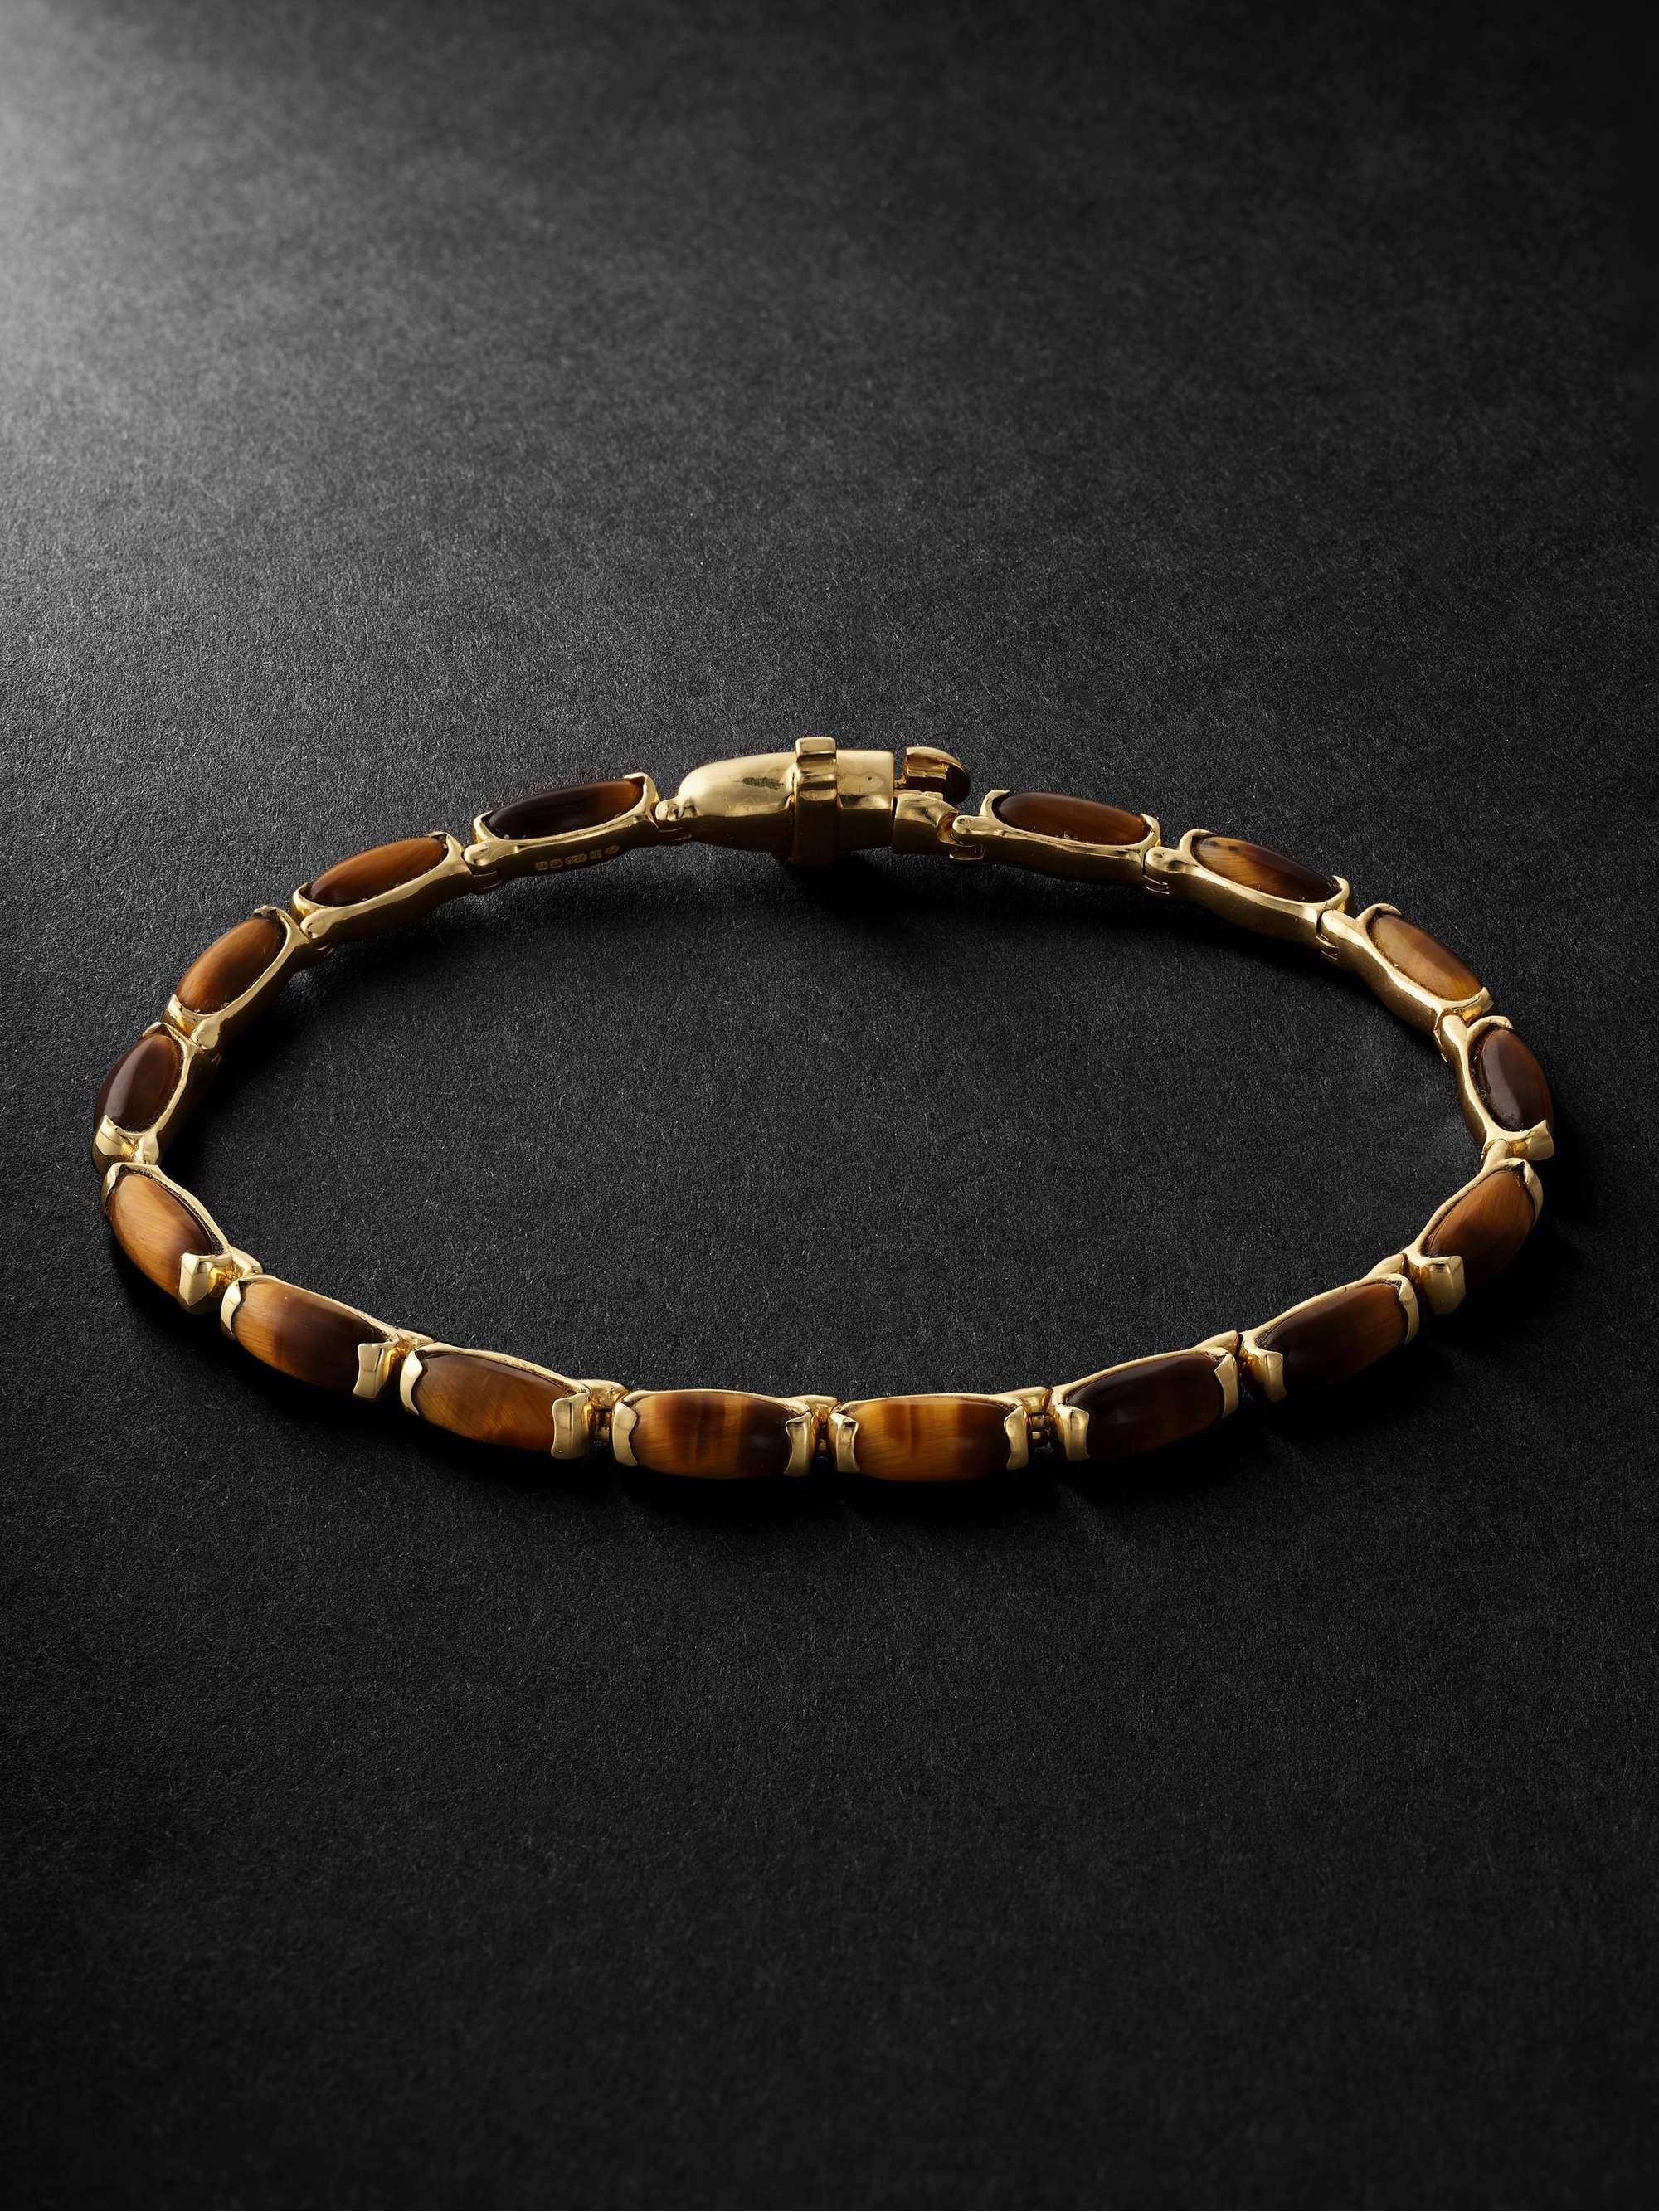 FERNANDO JORGE 18-Karat Gold Tiger's Eye Bracelet